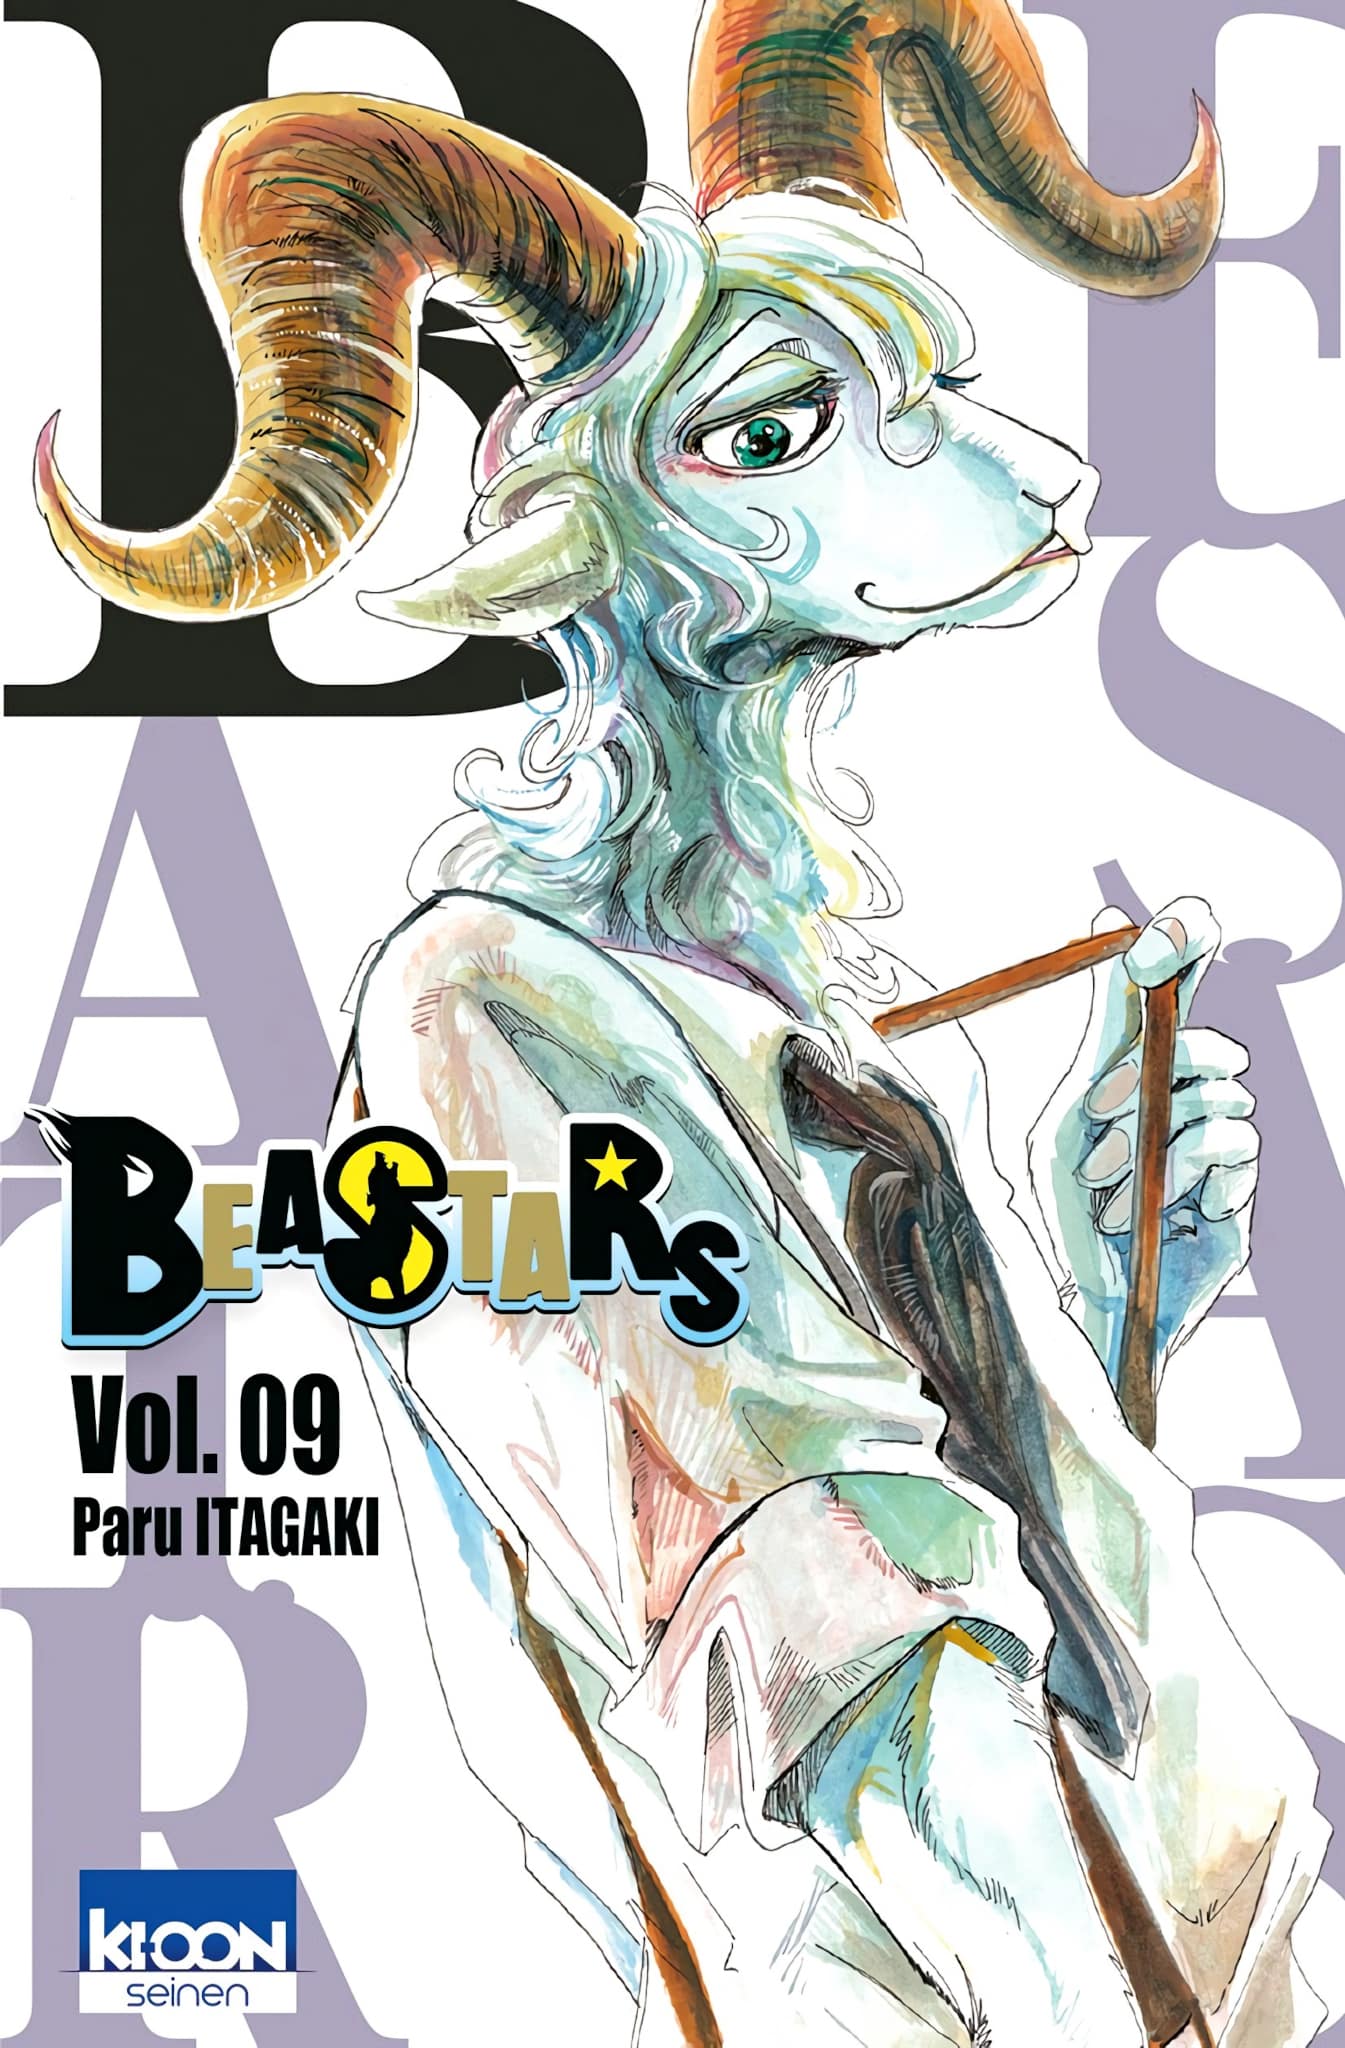 Tome 9 du manga Beastars